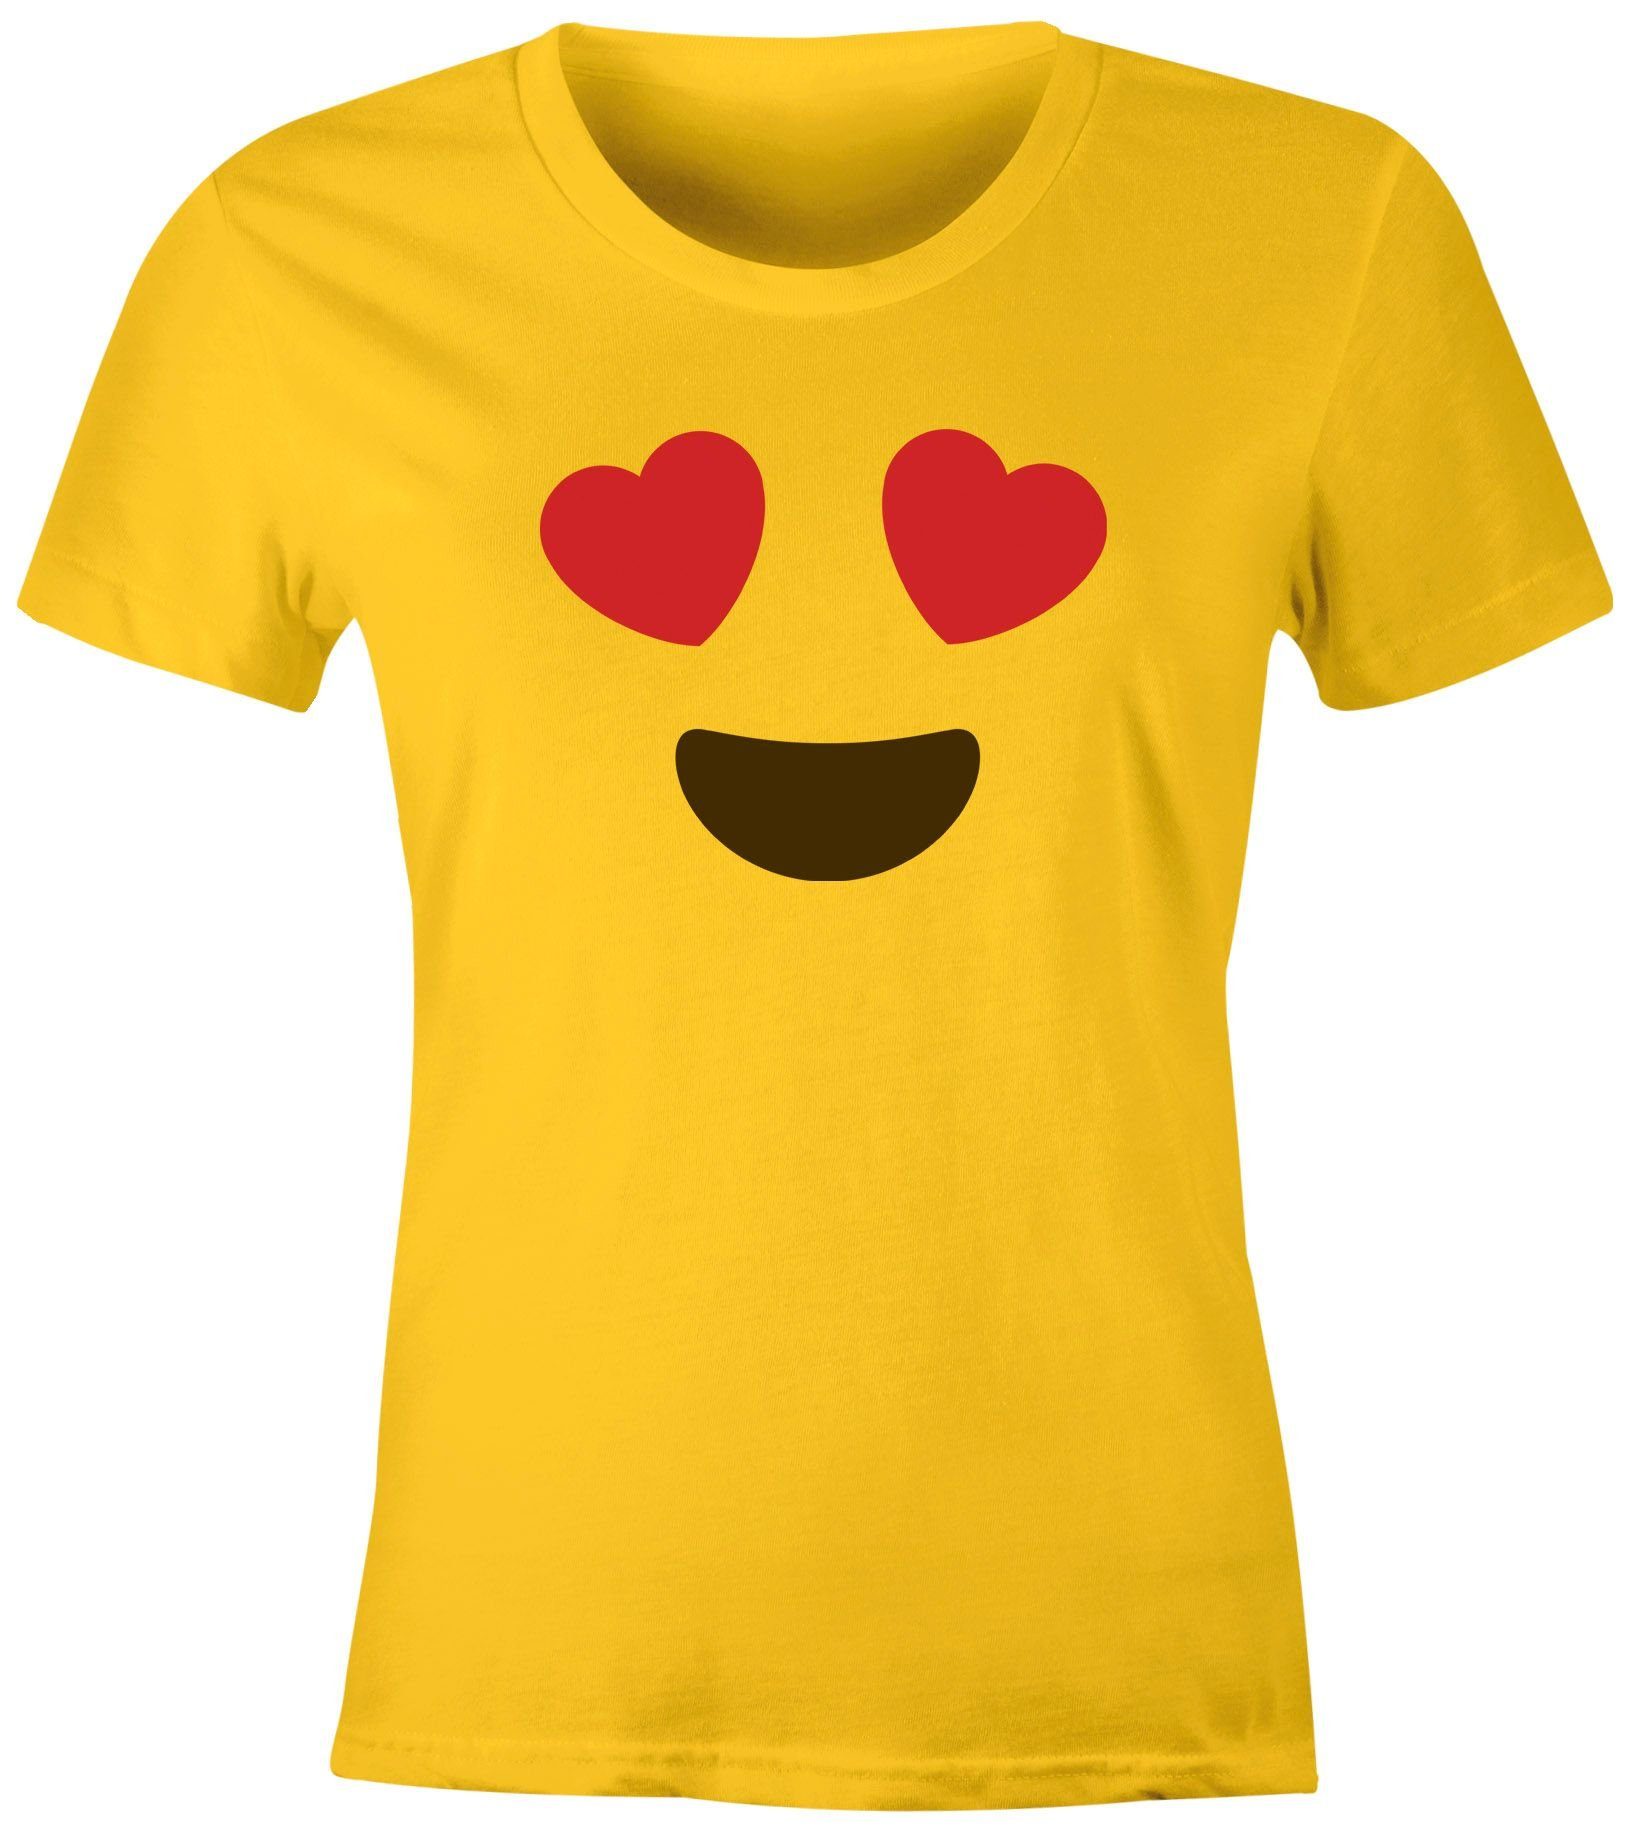 MoonWorks Print-Shirt JGA Fasching mit Emoticon Print gelb Fun-Shirt T-Shirt Junggesellenabschied Herzaugen Karneval lustig Gruppenkostüm Moonworks® Damen